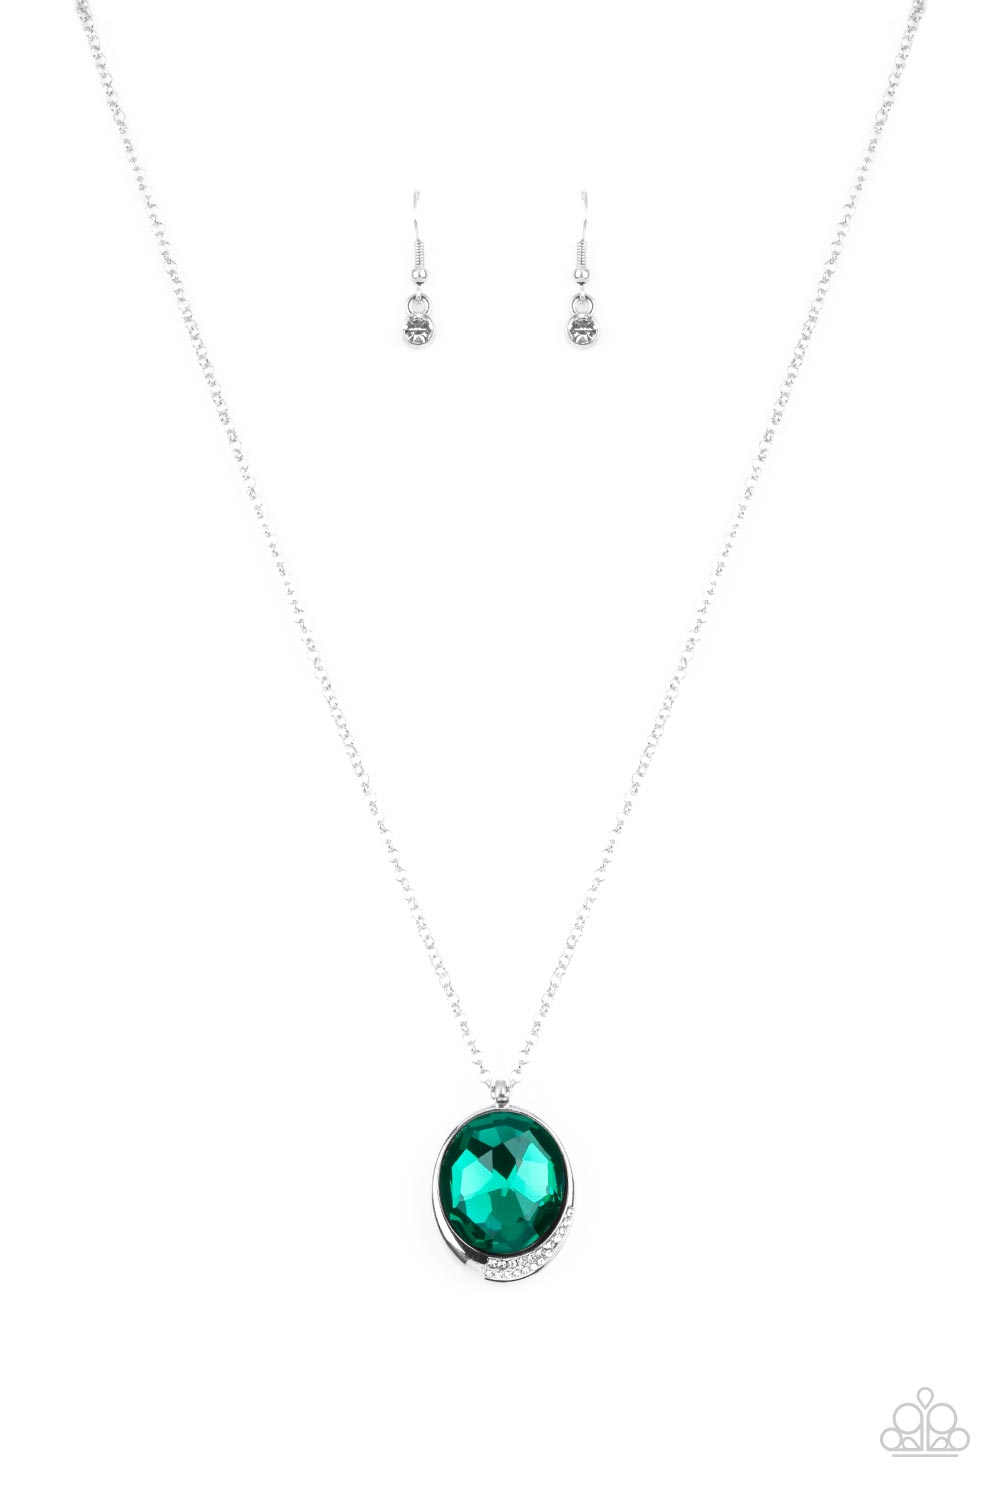 Fashion Finale Green Rhinestone Necklace - Paparazzi Accessories- lightbox - CarasShop.com - $5 Jewelry by Cara Jewels